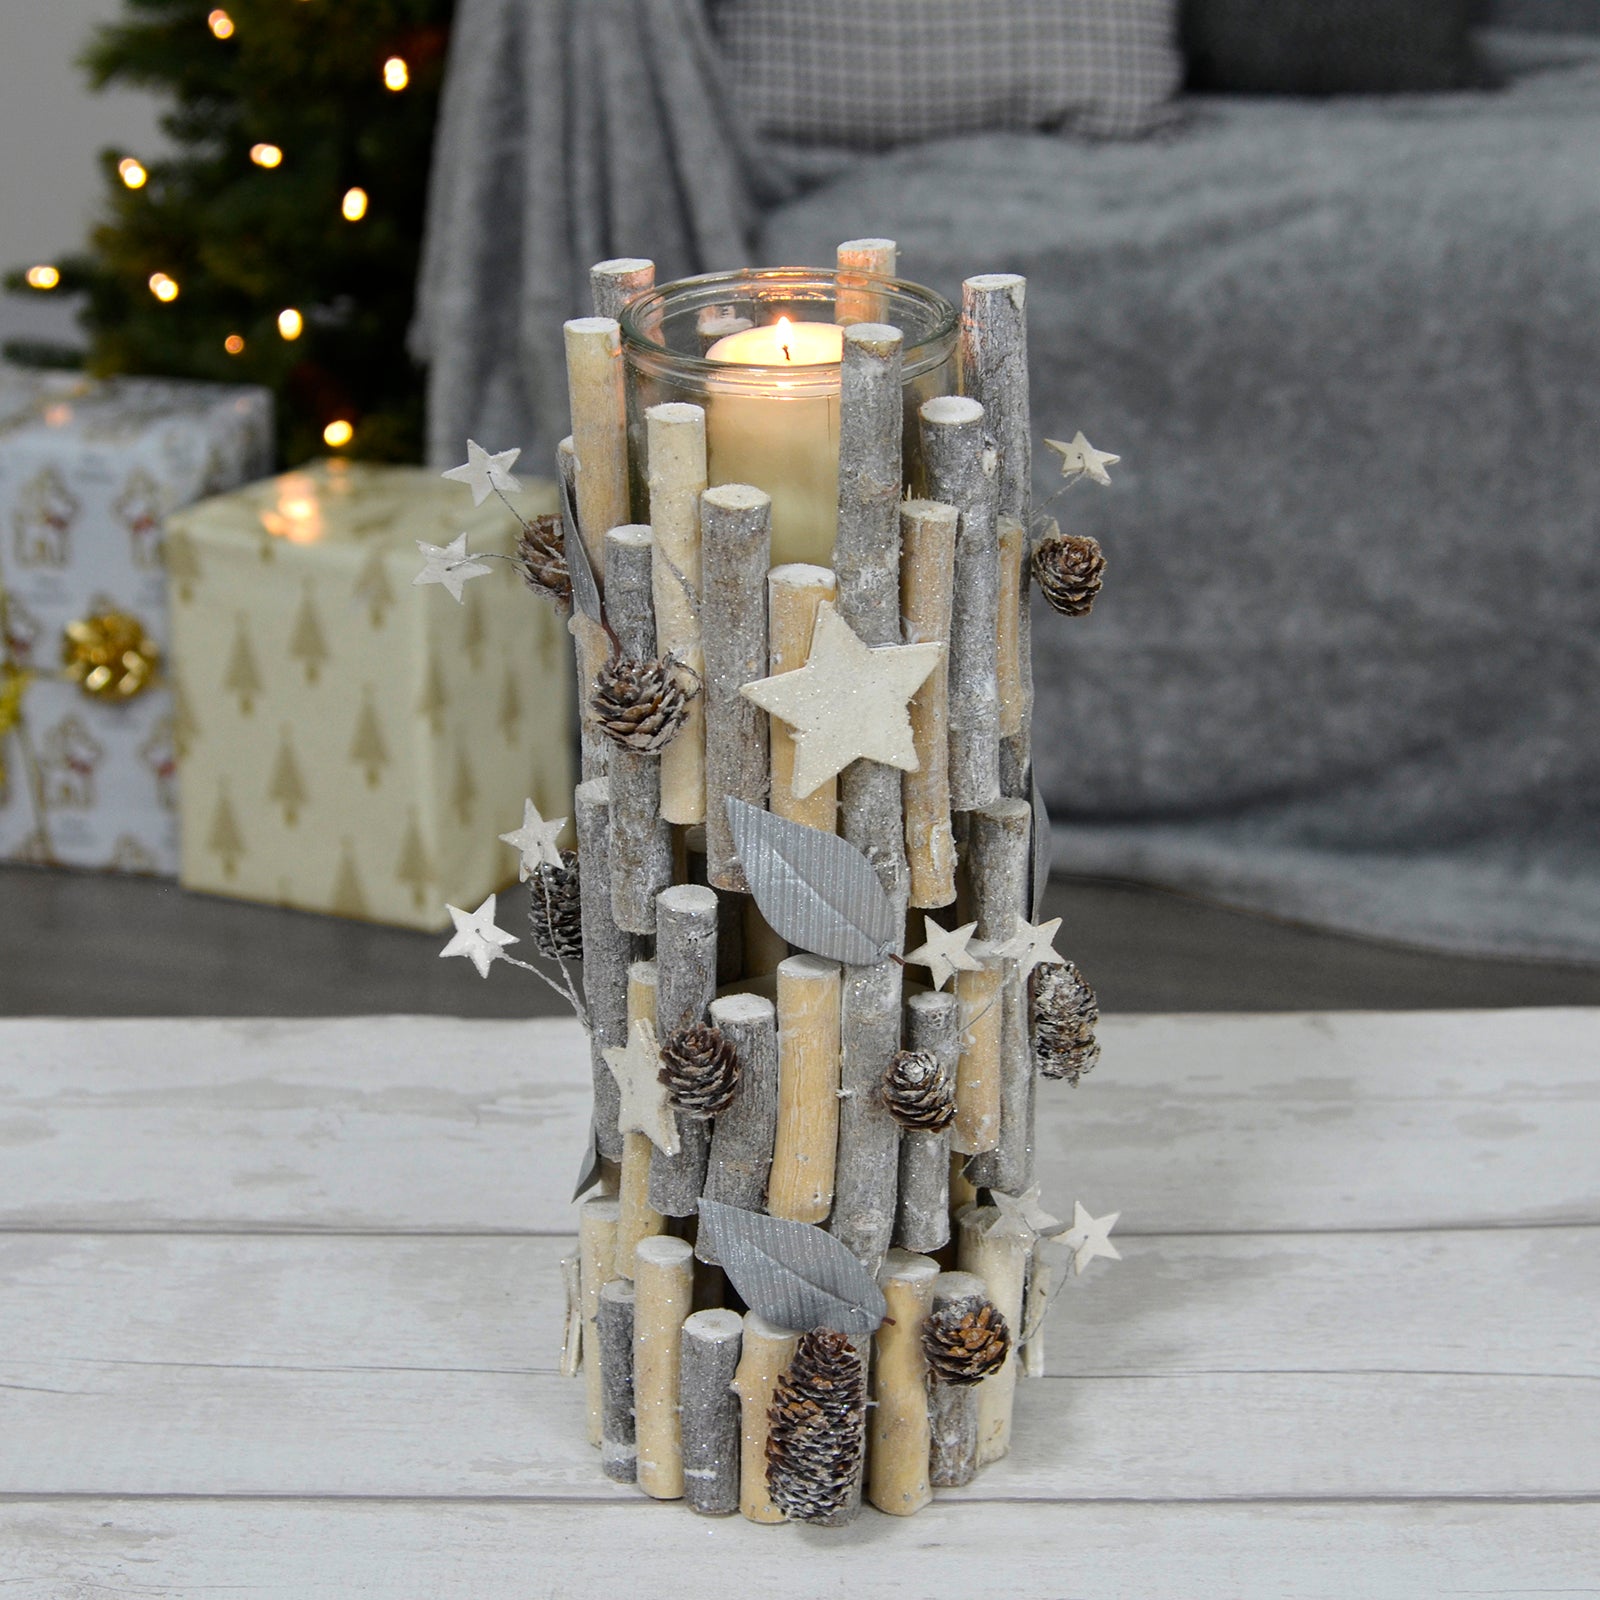 Mr Crimbo Tall Silver Twigs Wooden Tealight Candle Holder - MrCrimbo.co.uk -XS6690 - 37cm -candles